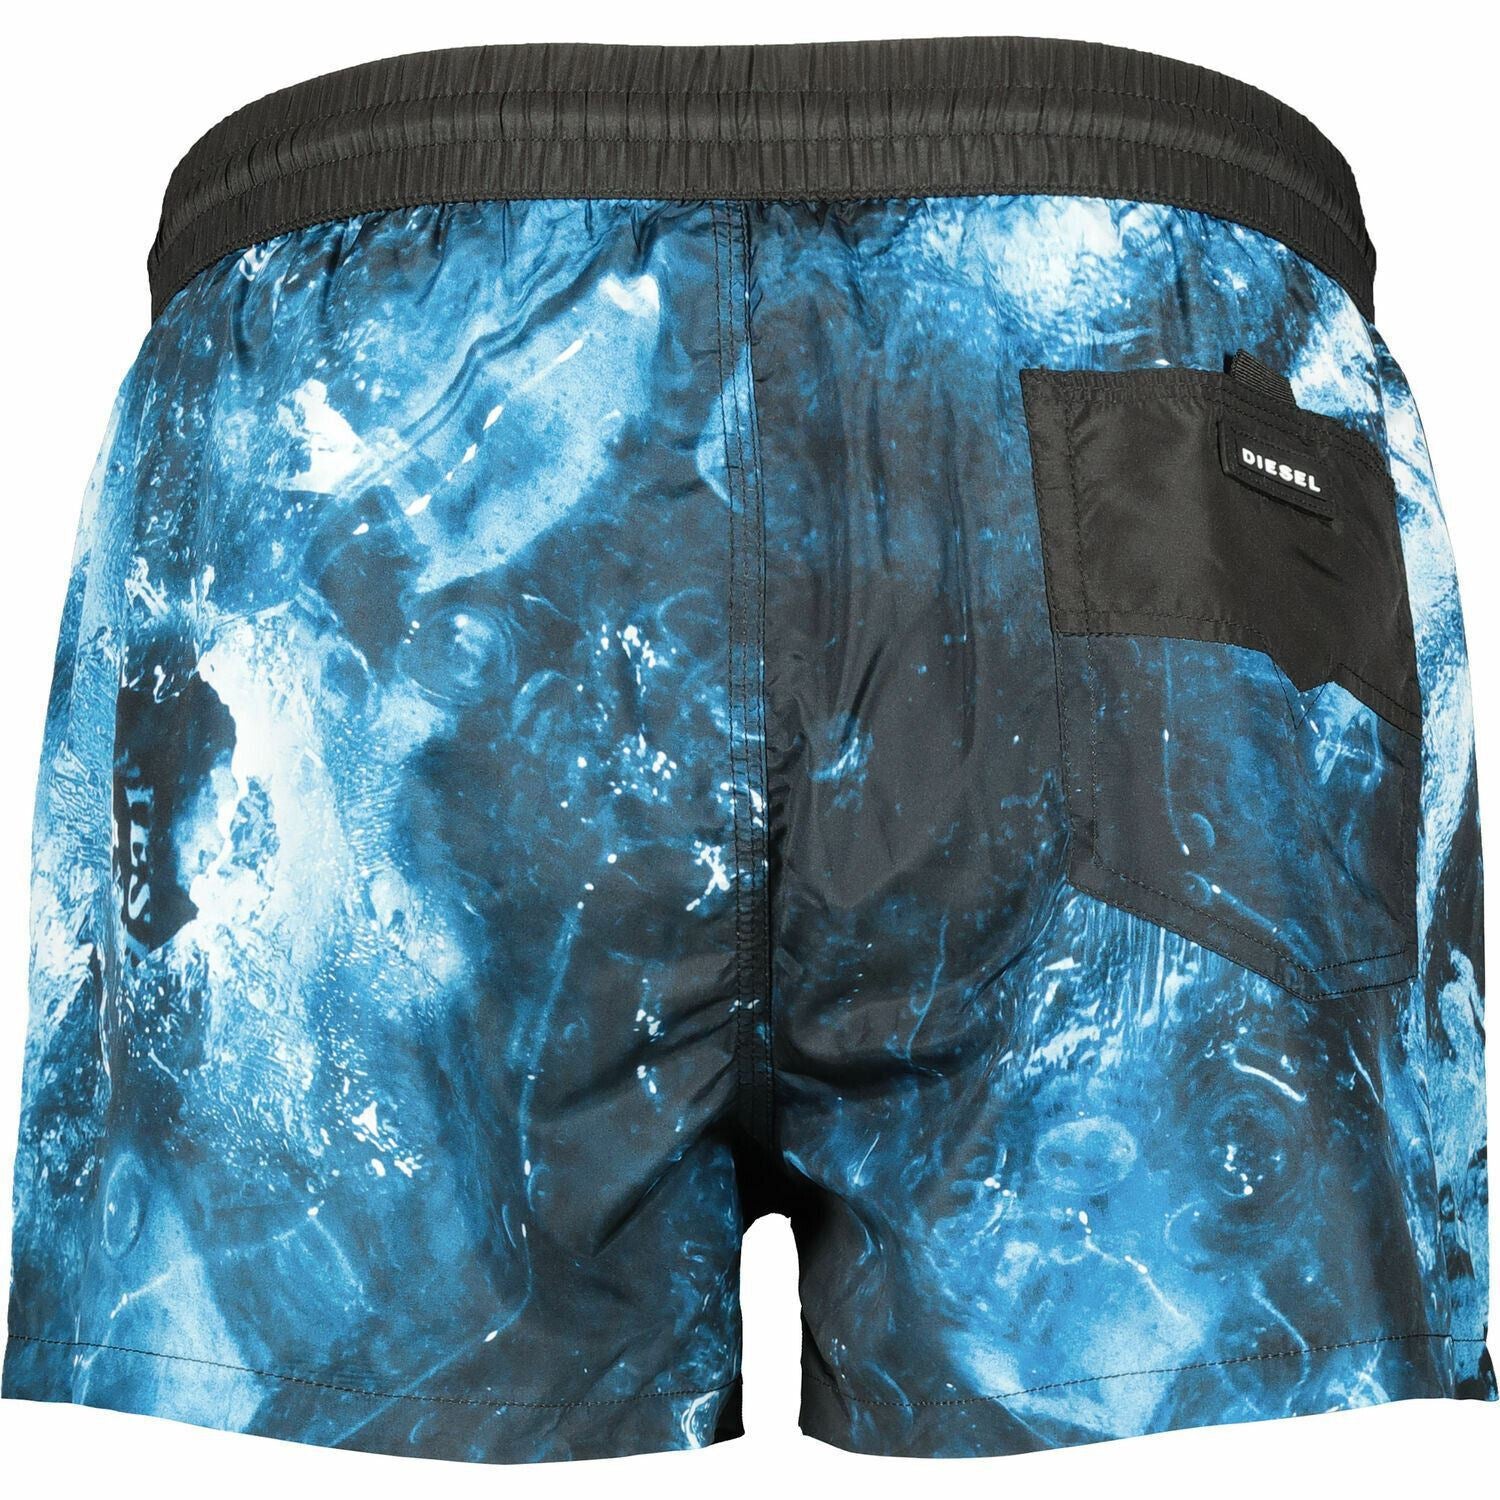 DIESEL Men's Blue Graphic Print Swim Shorts, Size Large